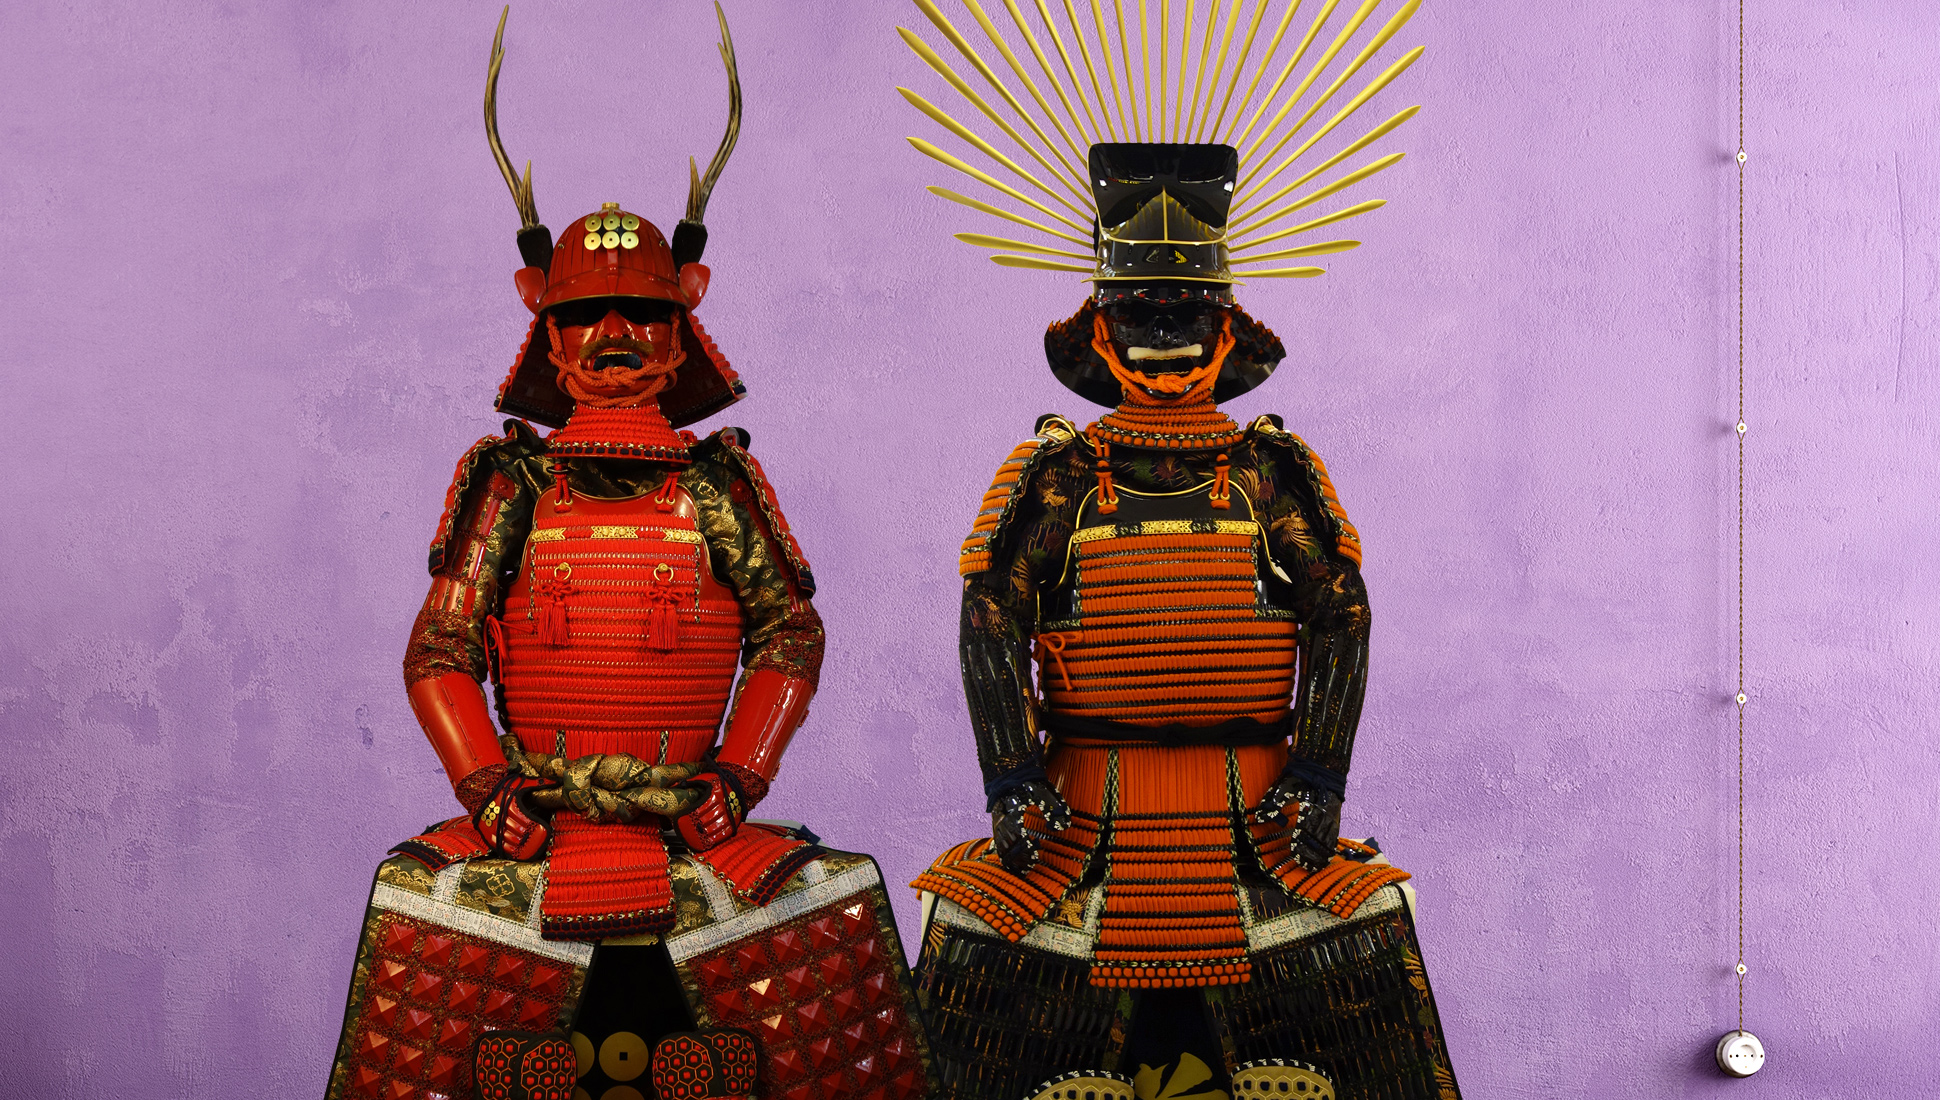 Menpo Display Stand: Display your Samurai Menpo or Mask